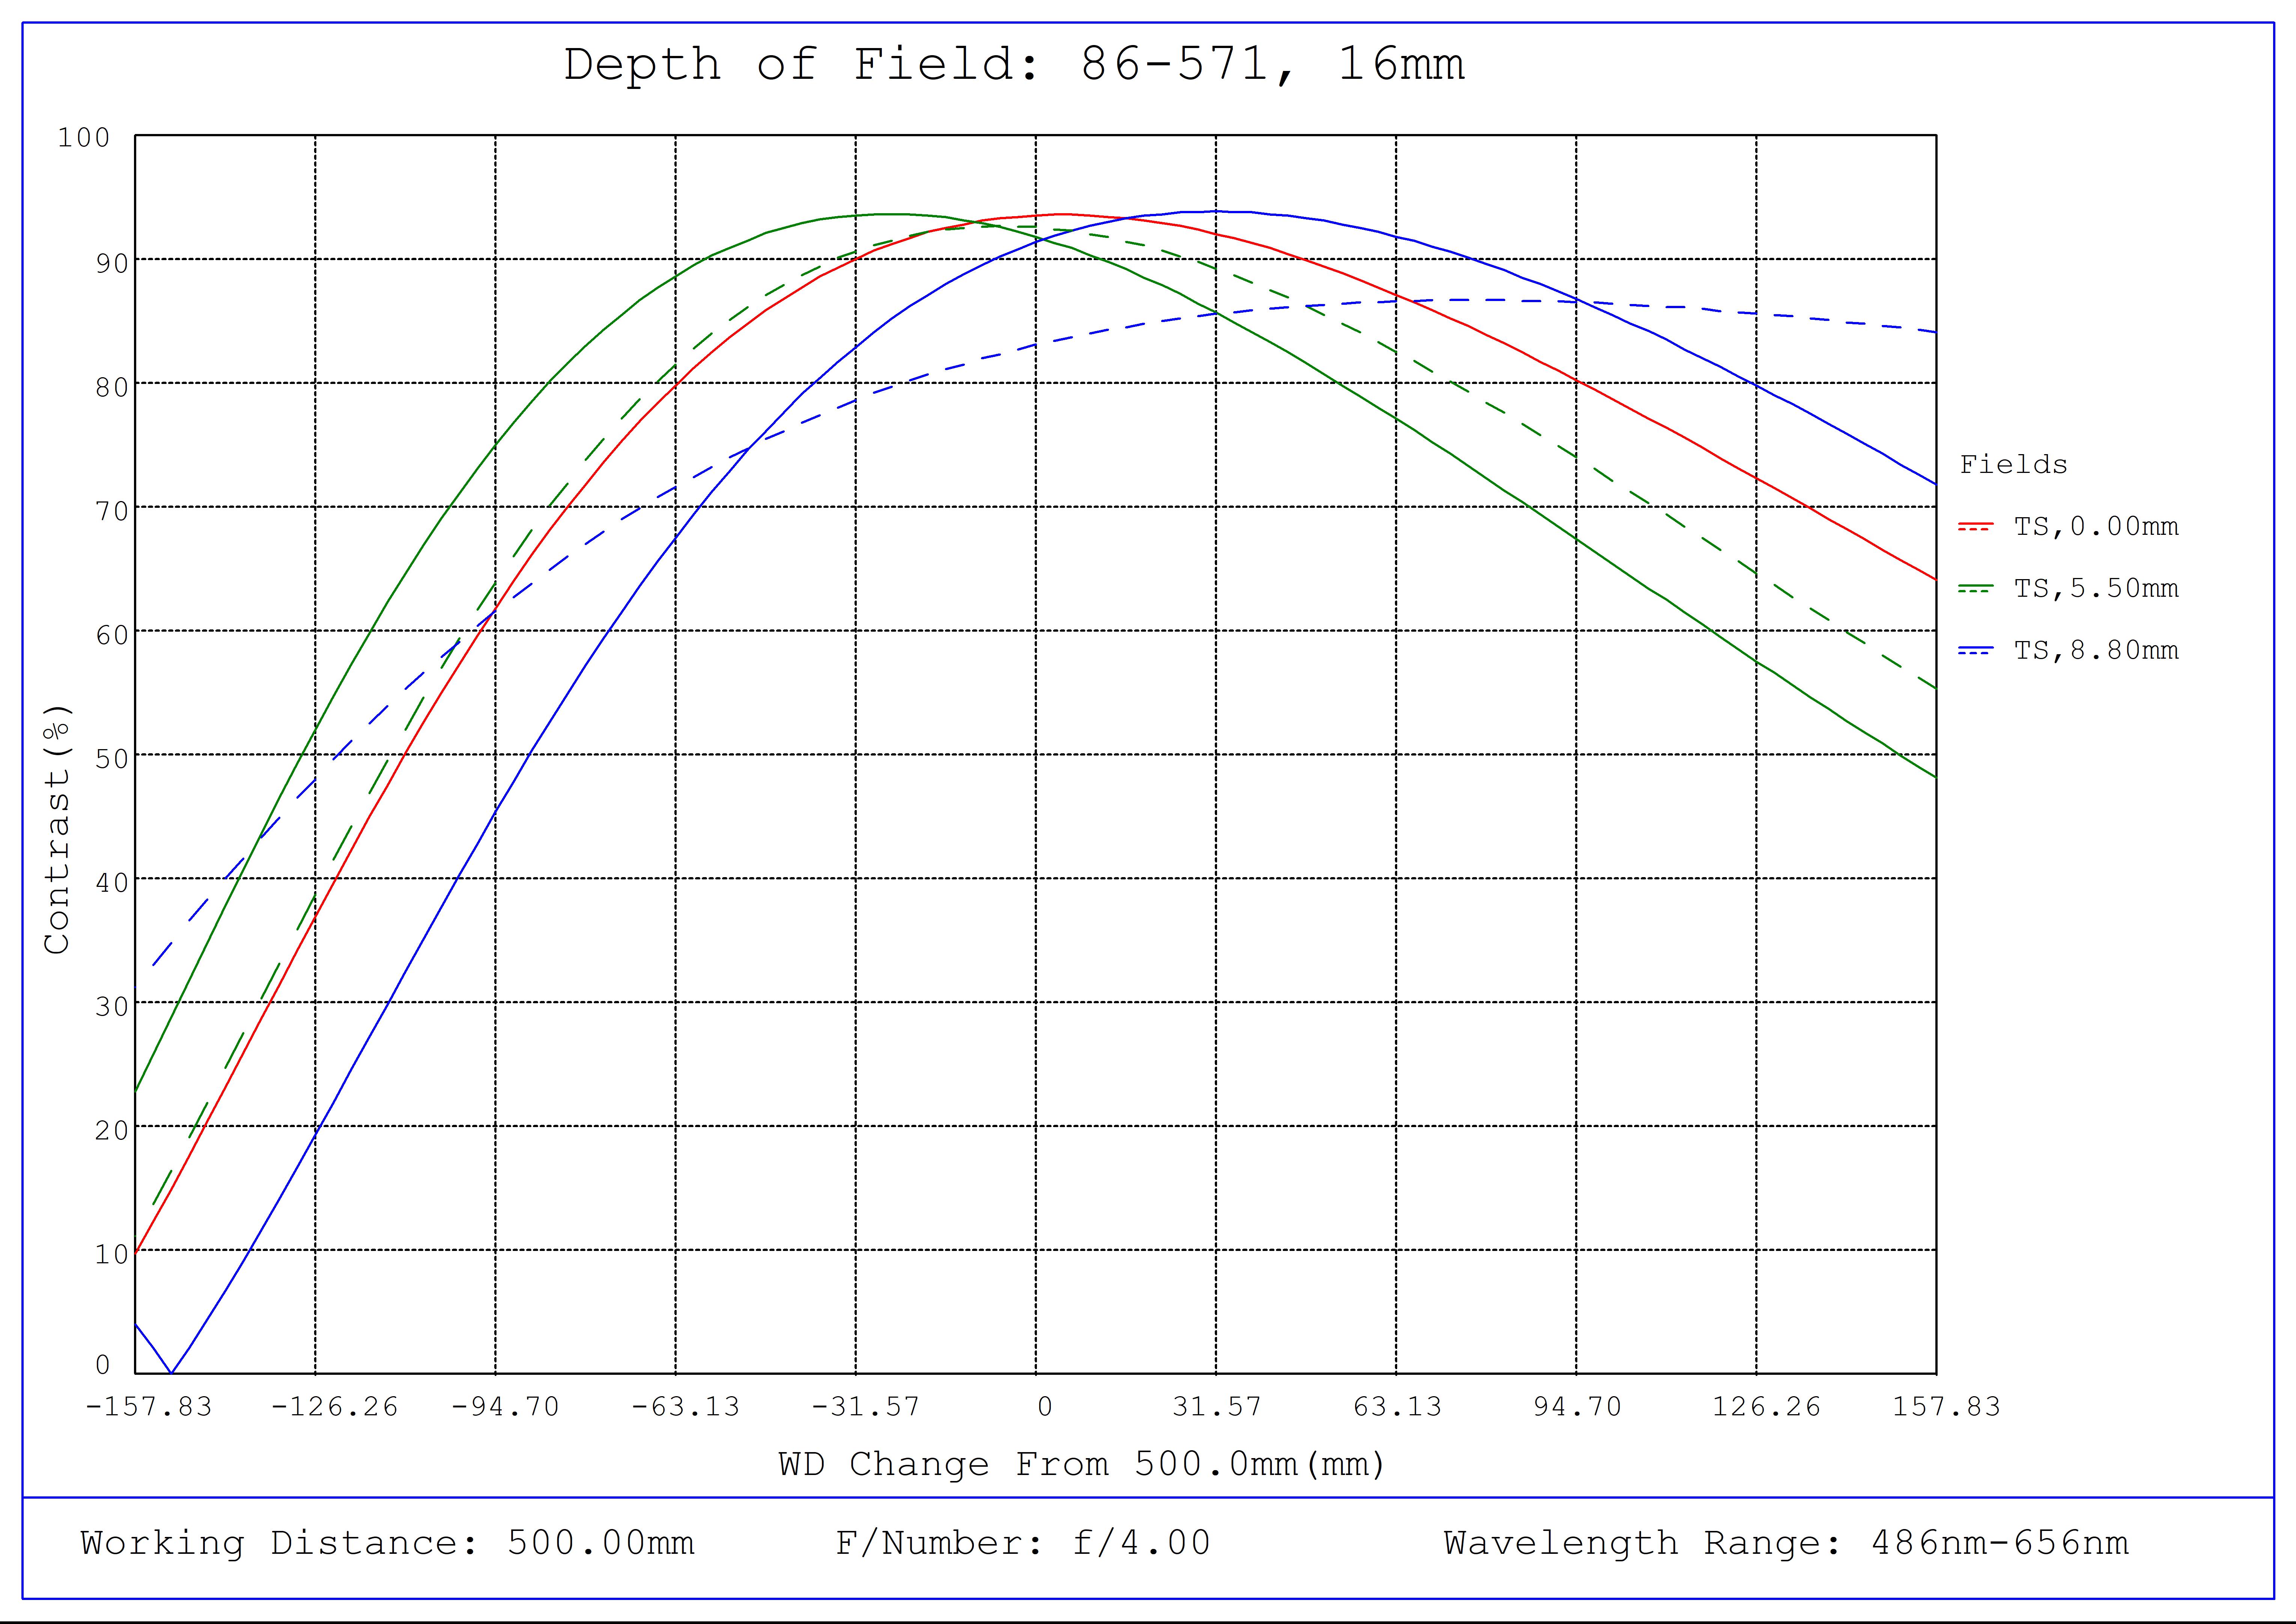 #86-571, 16mm Focal Length, HP Series Fixed Focal Length Lens, Depth of Field Plot, 500mm Working Distance, f4